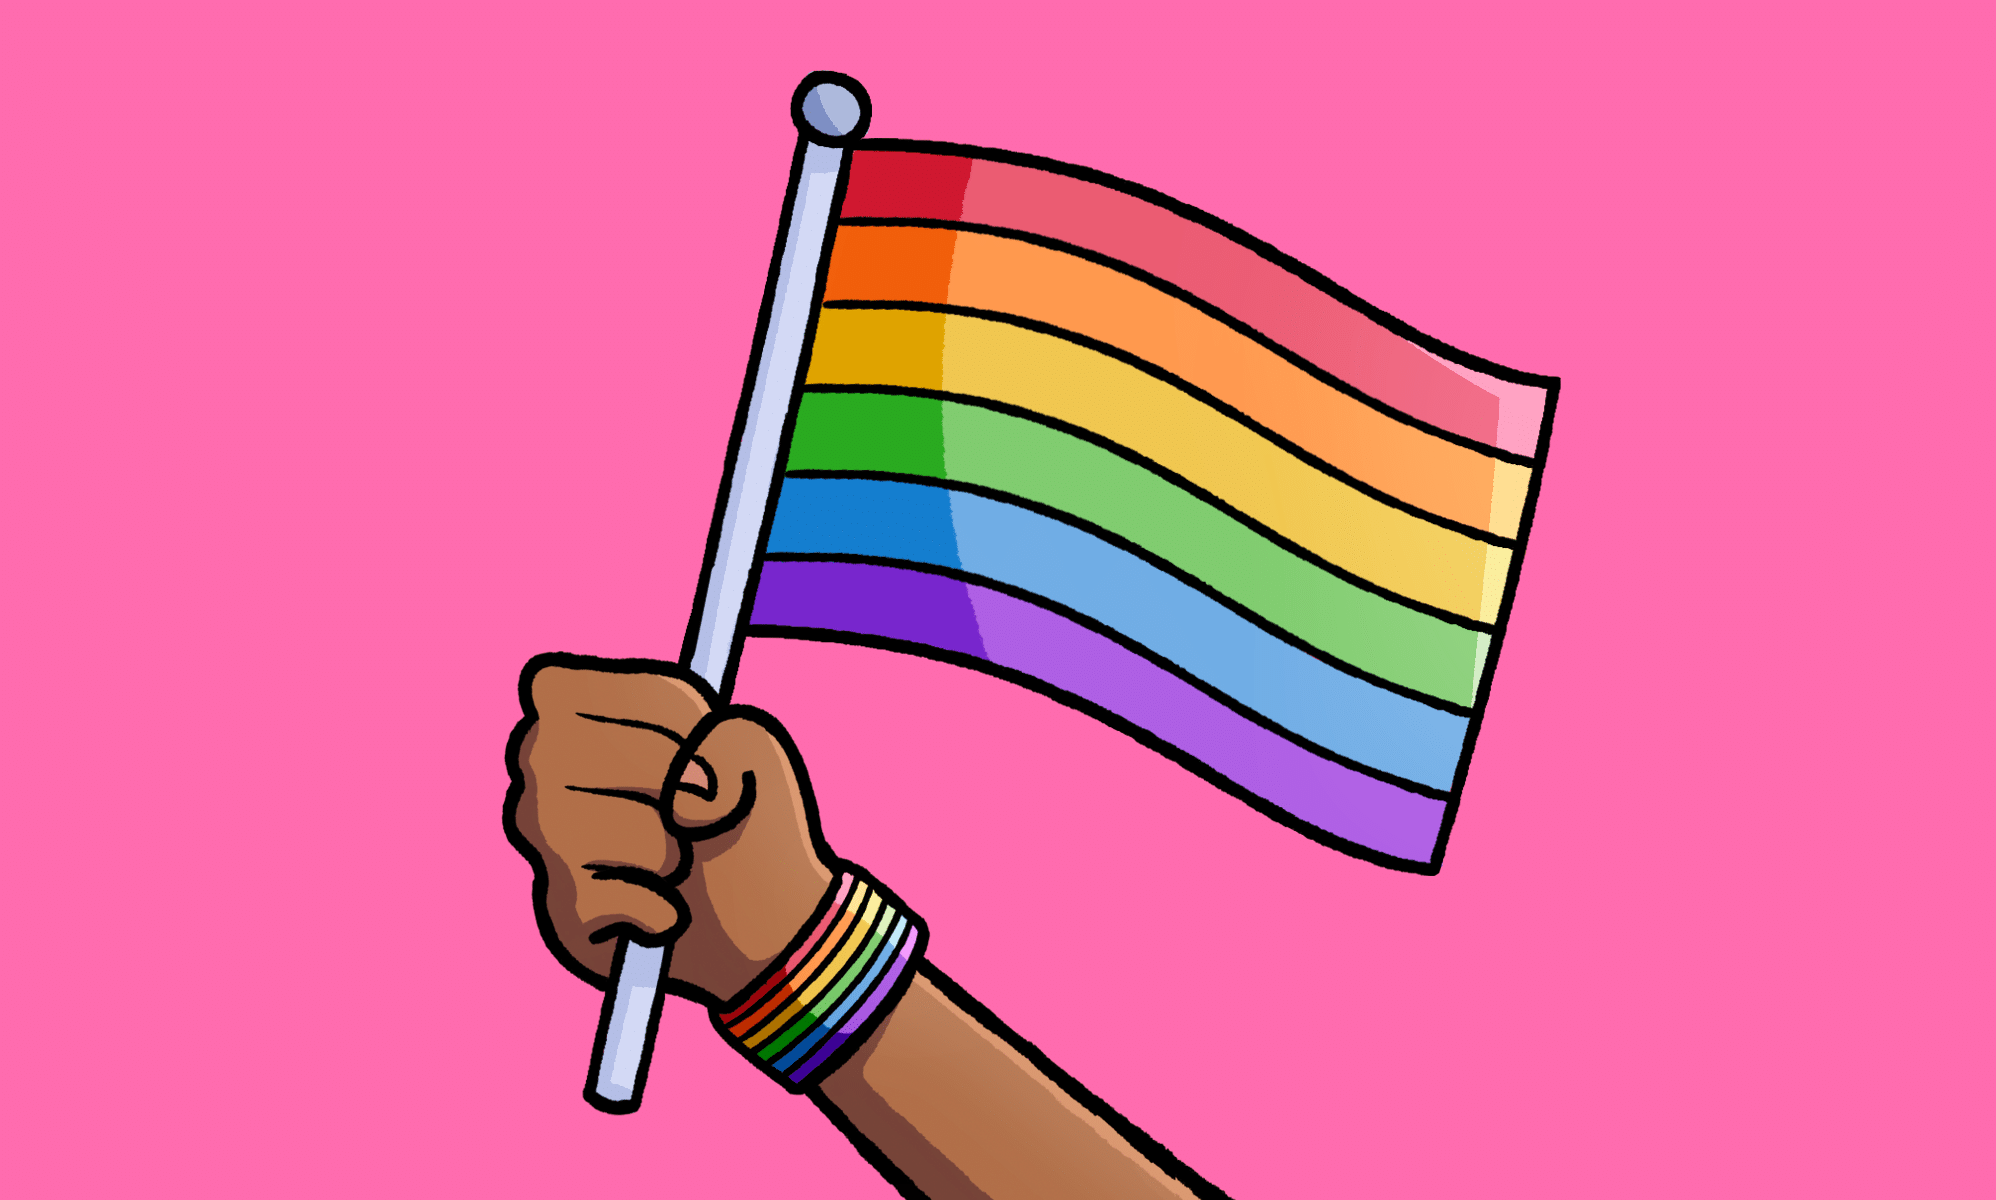 "Sashay away" Pride 2017 sign